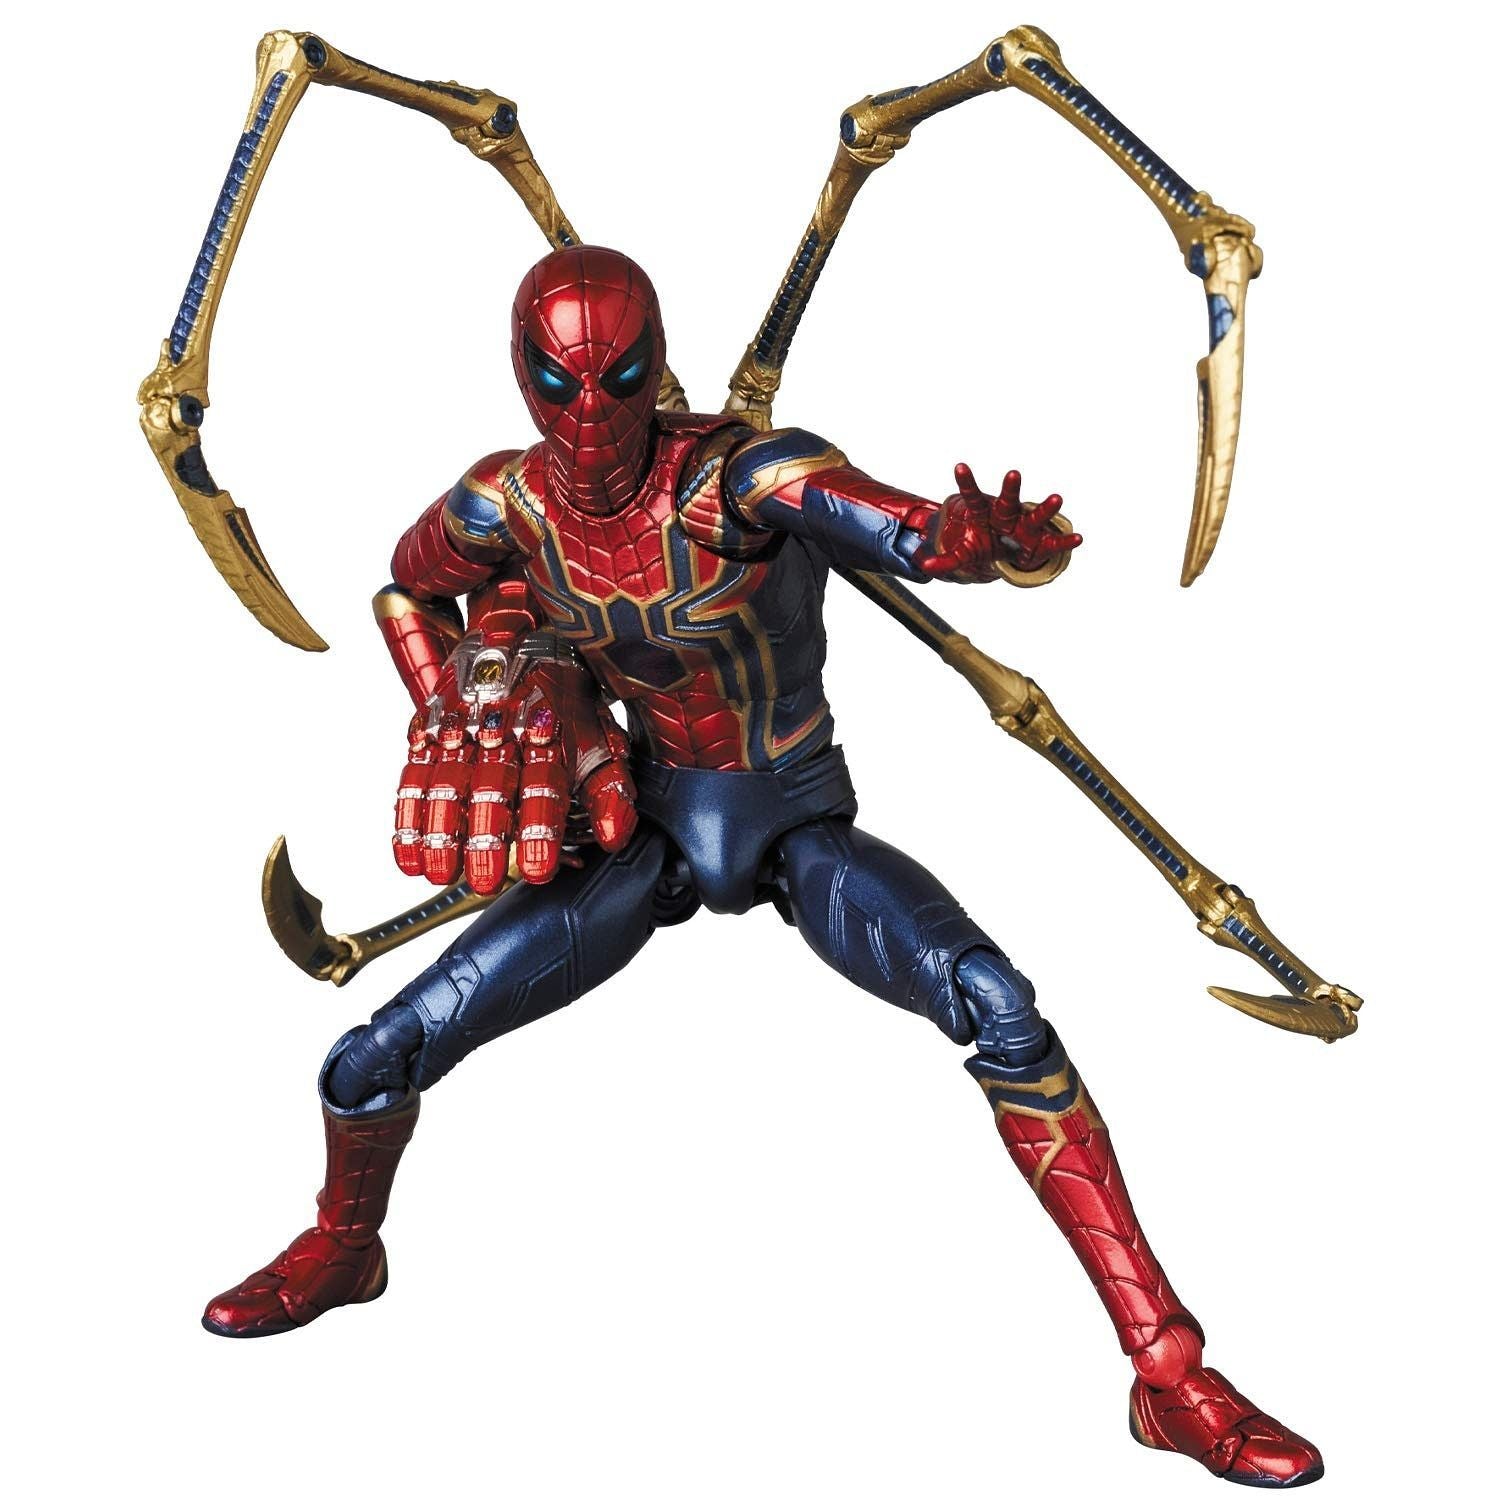 Medicom - MAFEX No. 121 - Avengers: Endgame - Iron Spider